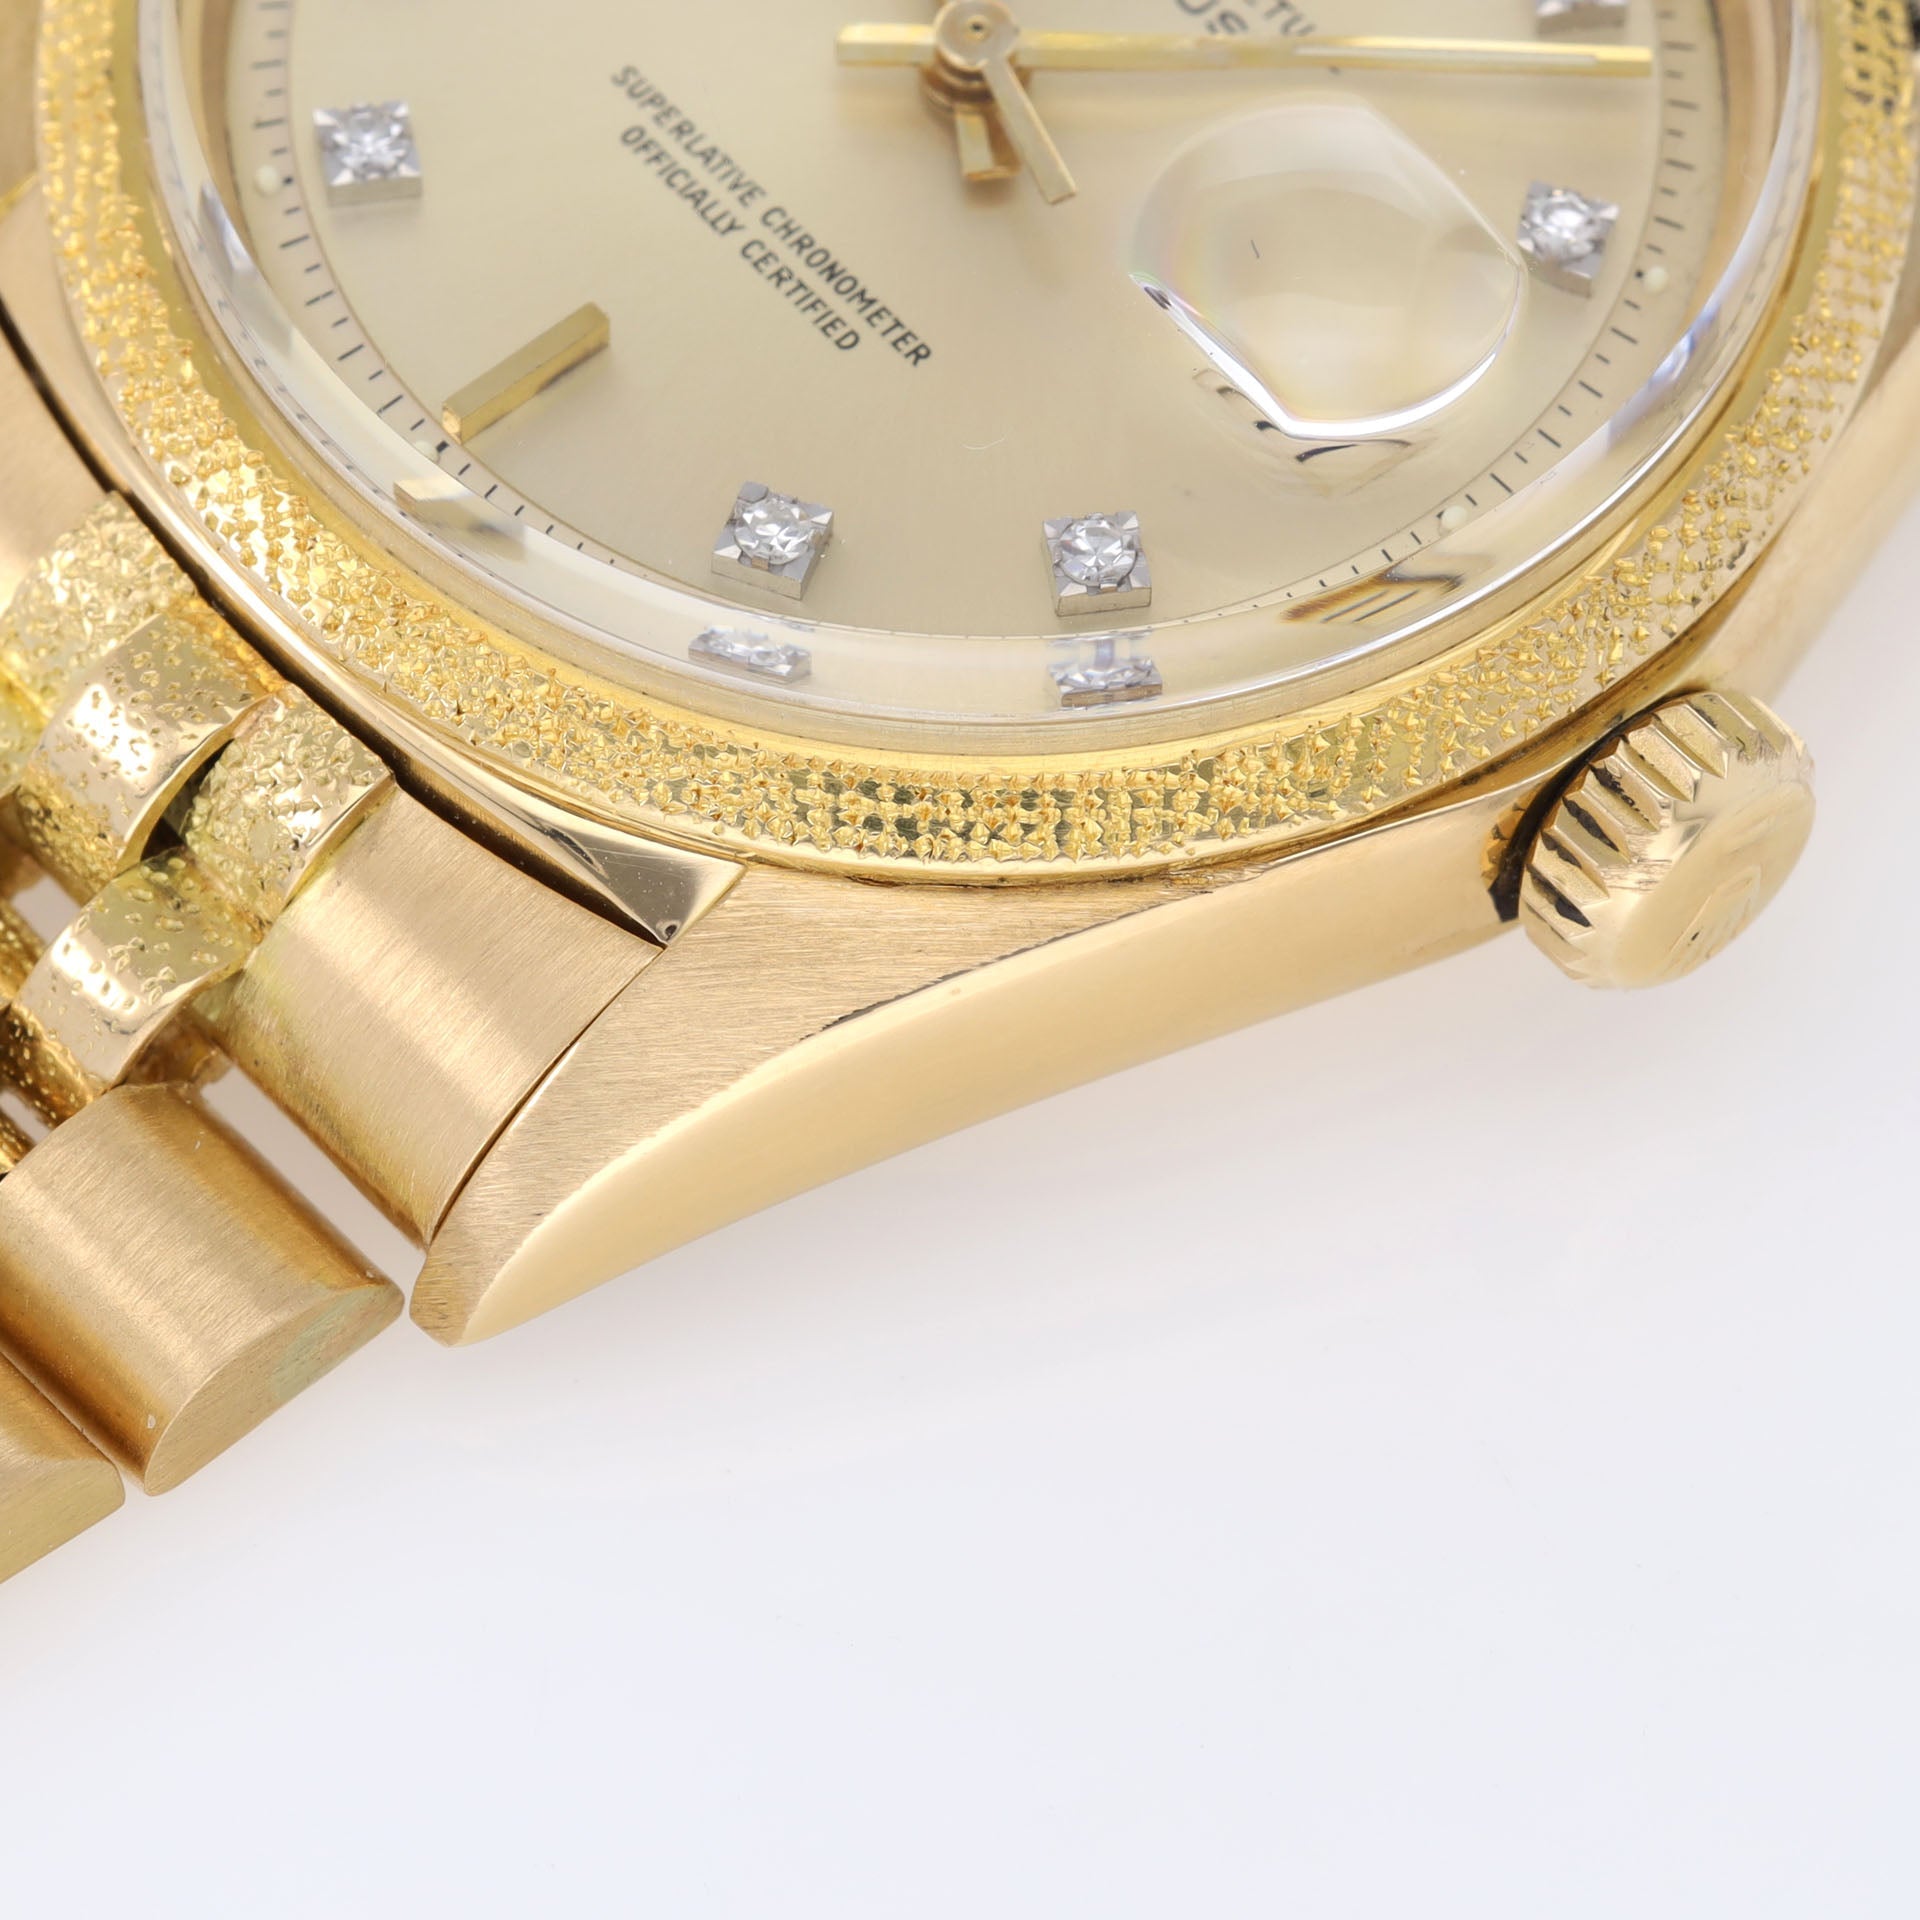 Rolex Datejust 1611 Yellow Gold Morellis Finish Diamond Dial